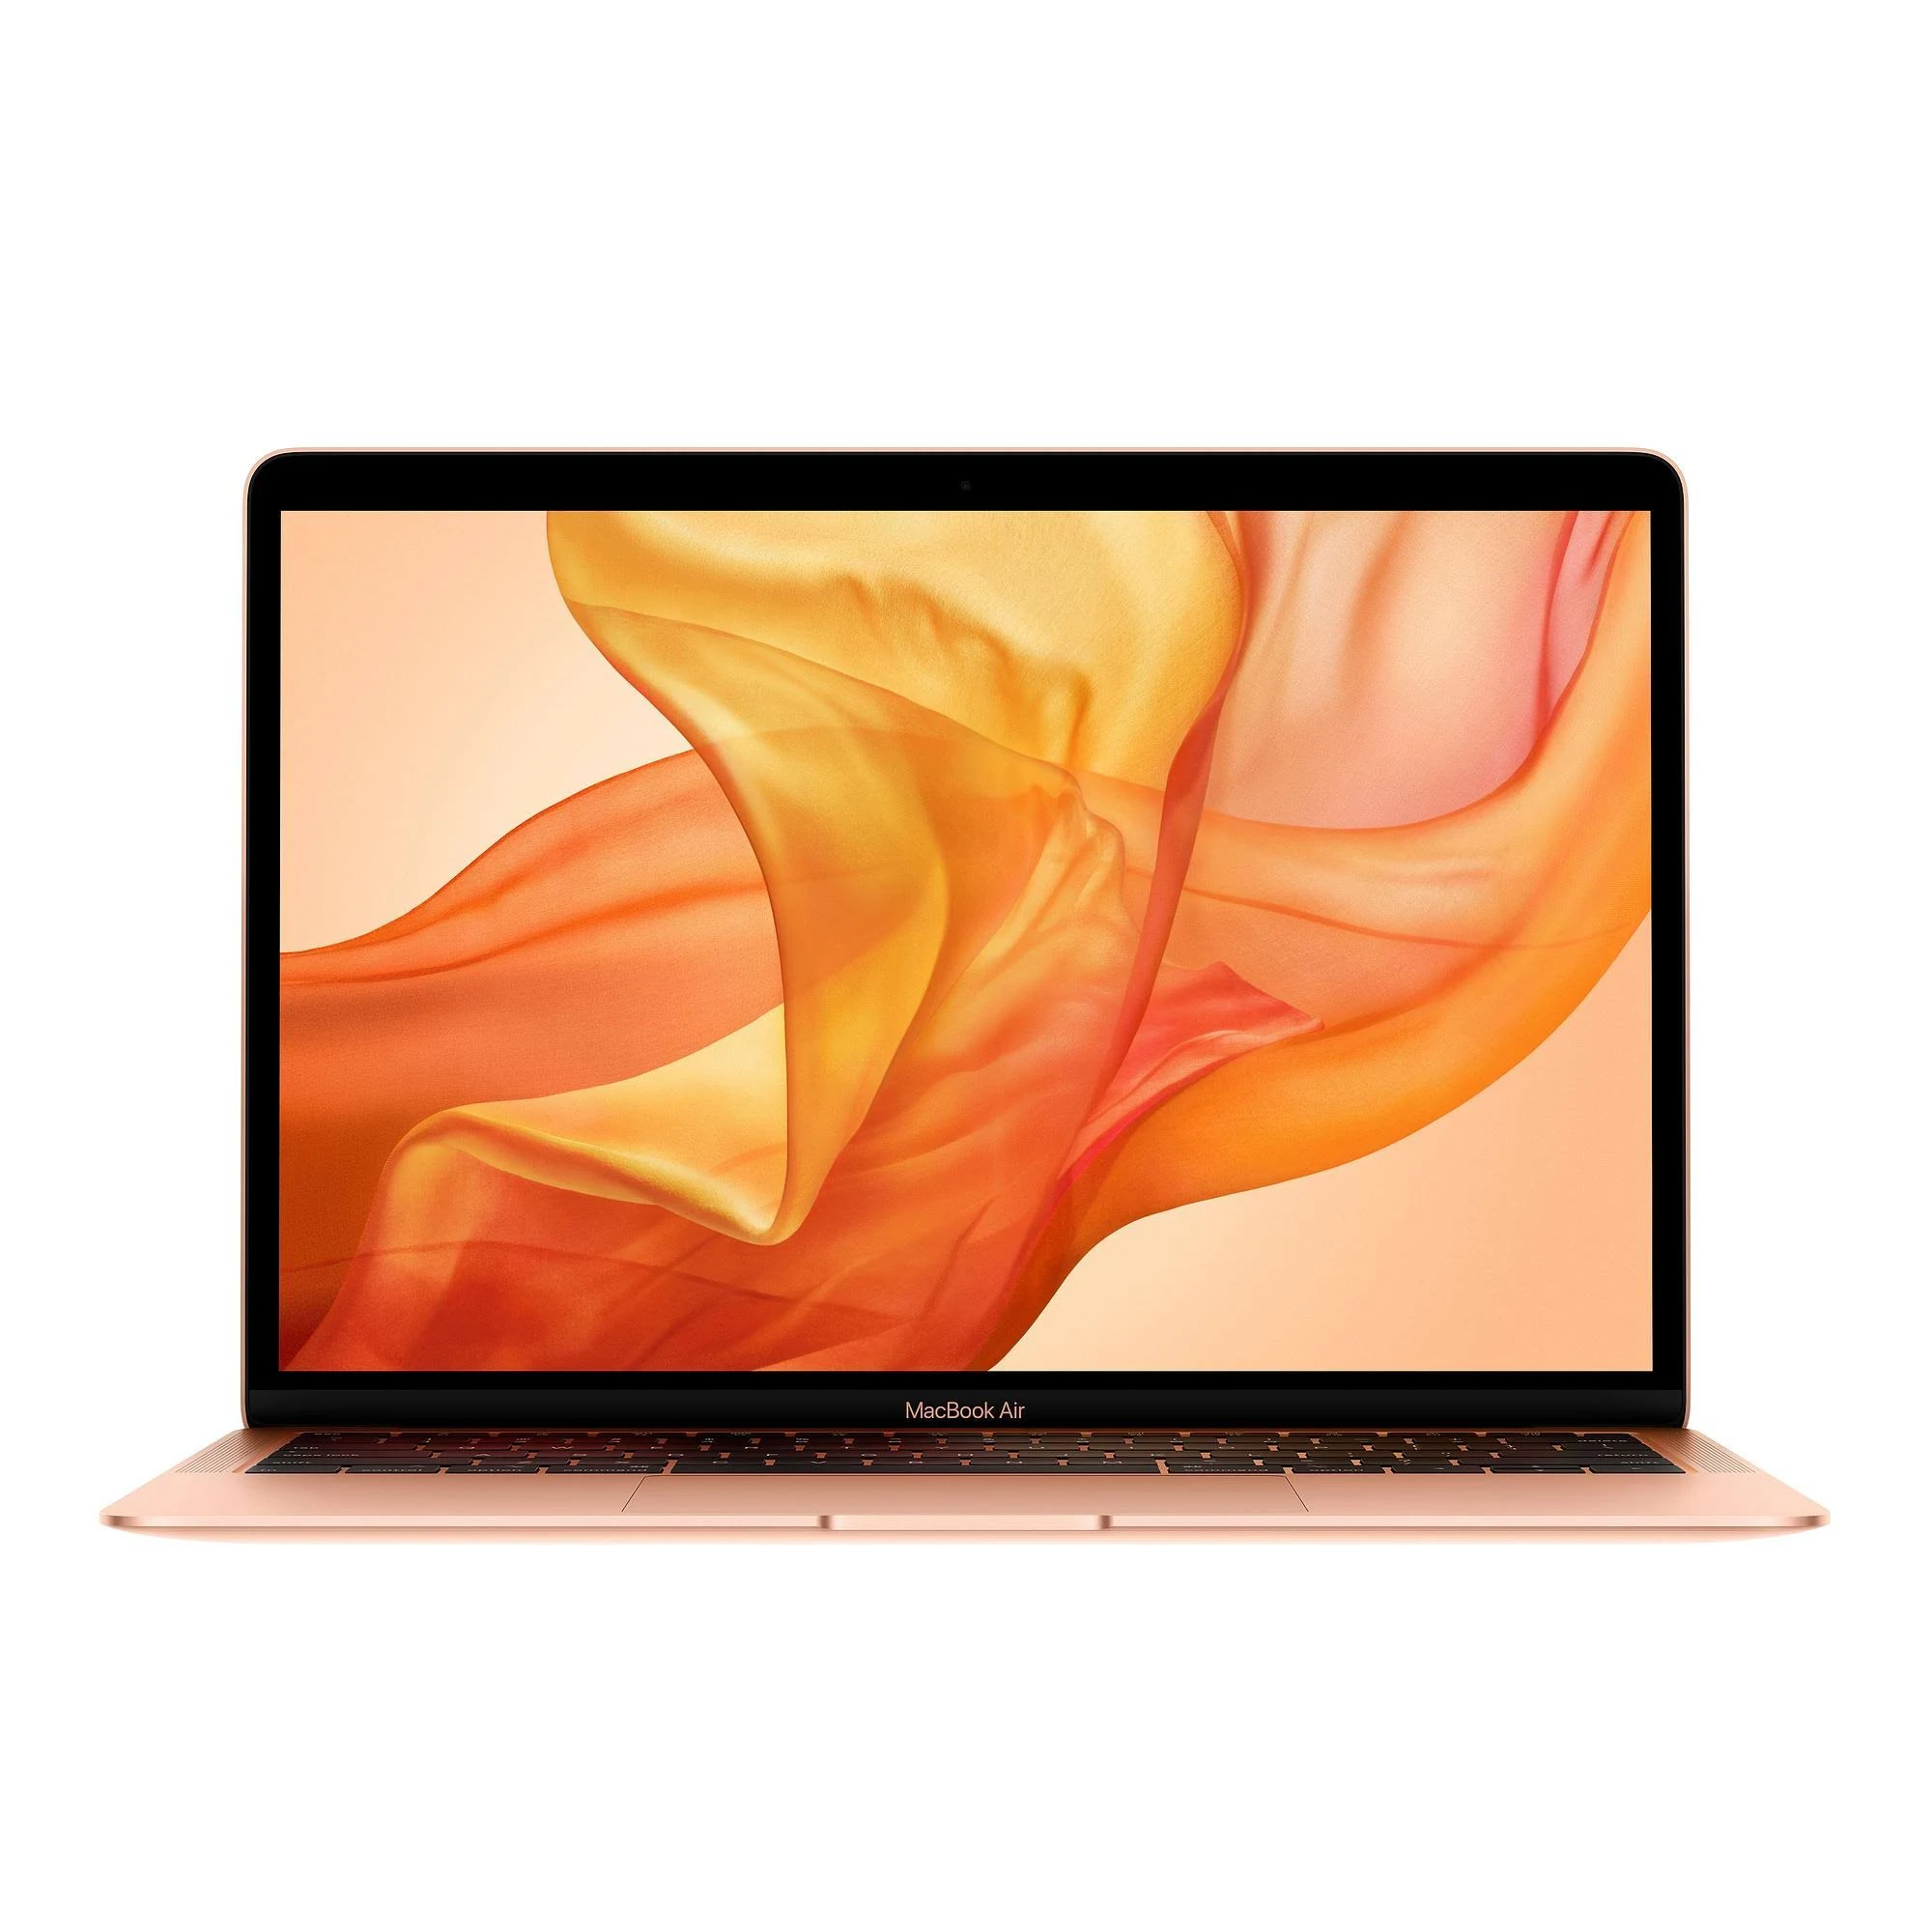 MacBook Air 13 inch True Tone 2019 i5 1.6GHz - 128GB SSD - 8GB Ram 128GB Gold Very Good